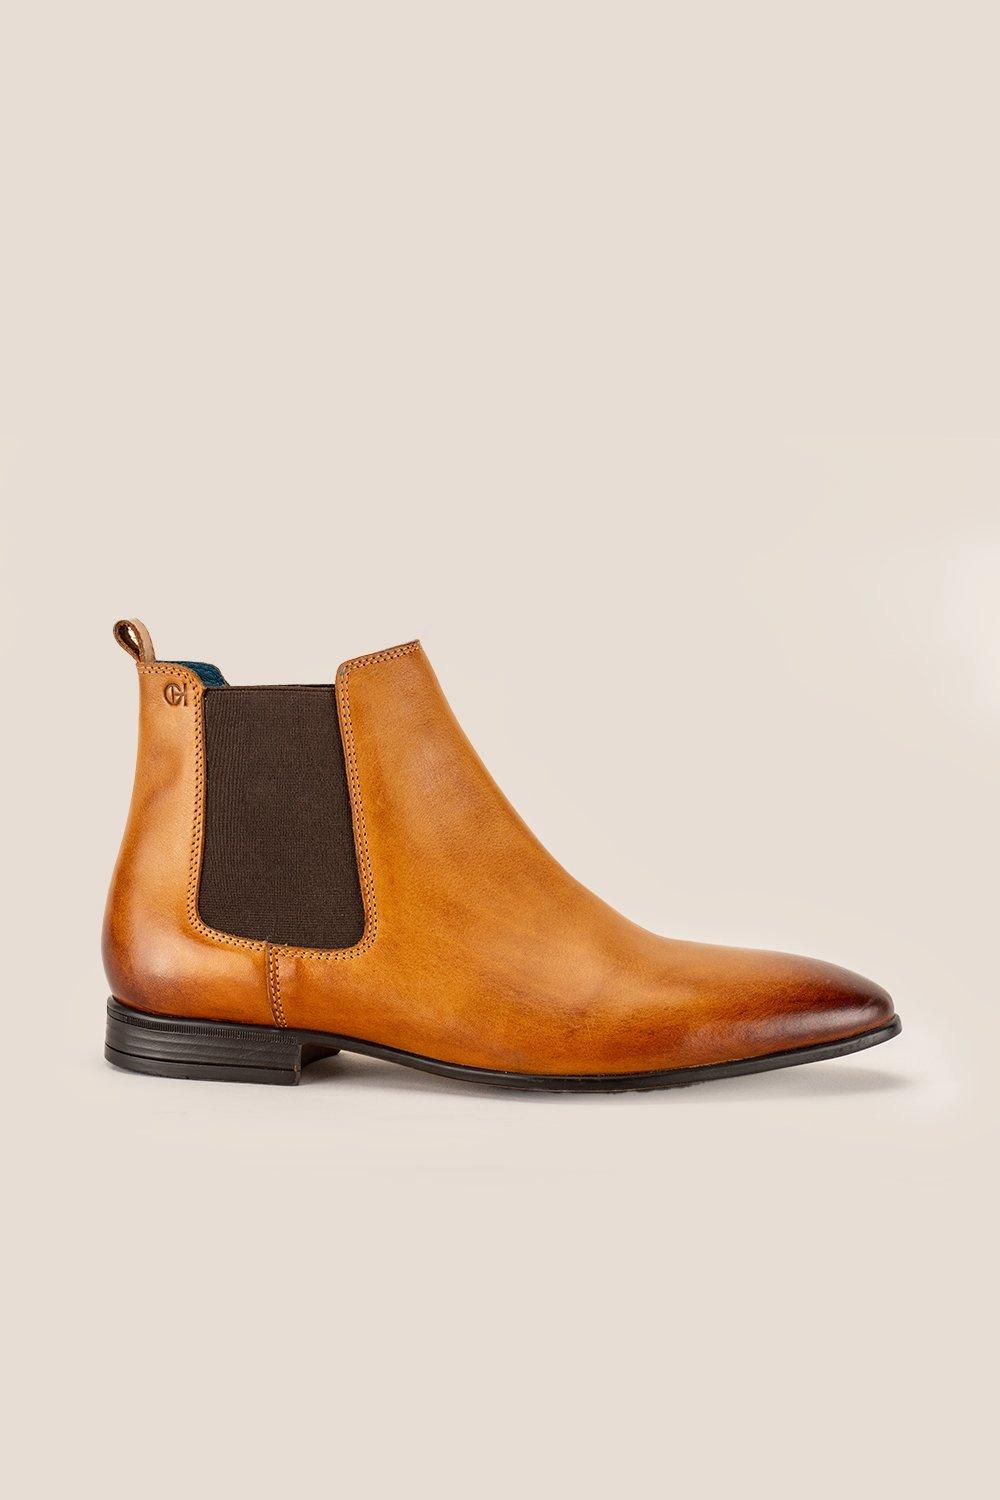 Кожаные ботинки челси Darwin Oswin Hyde, коричневый